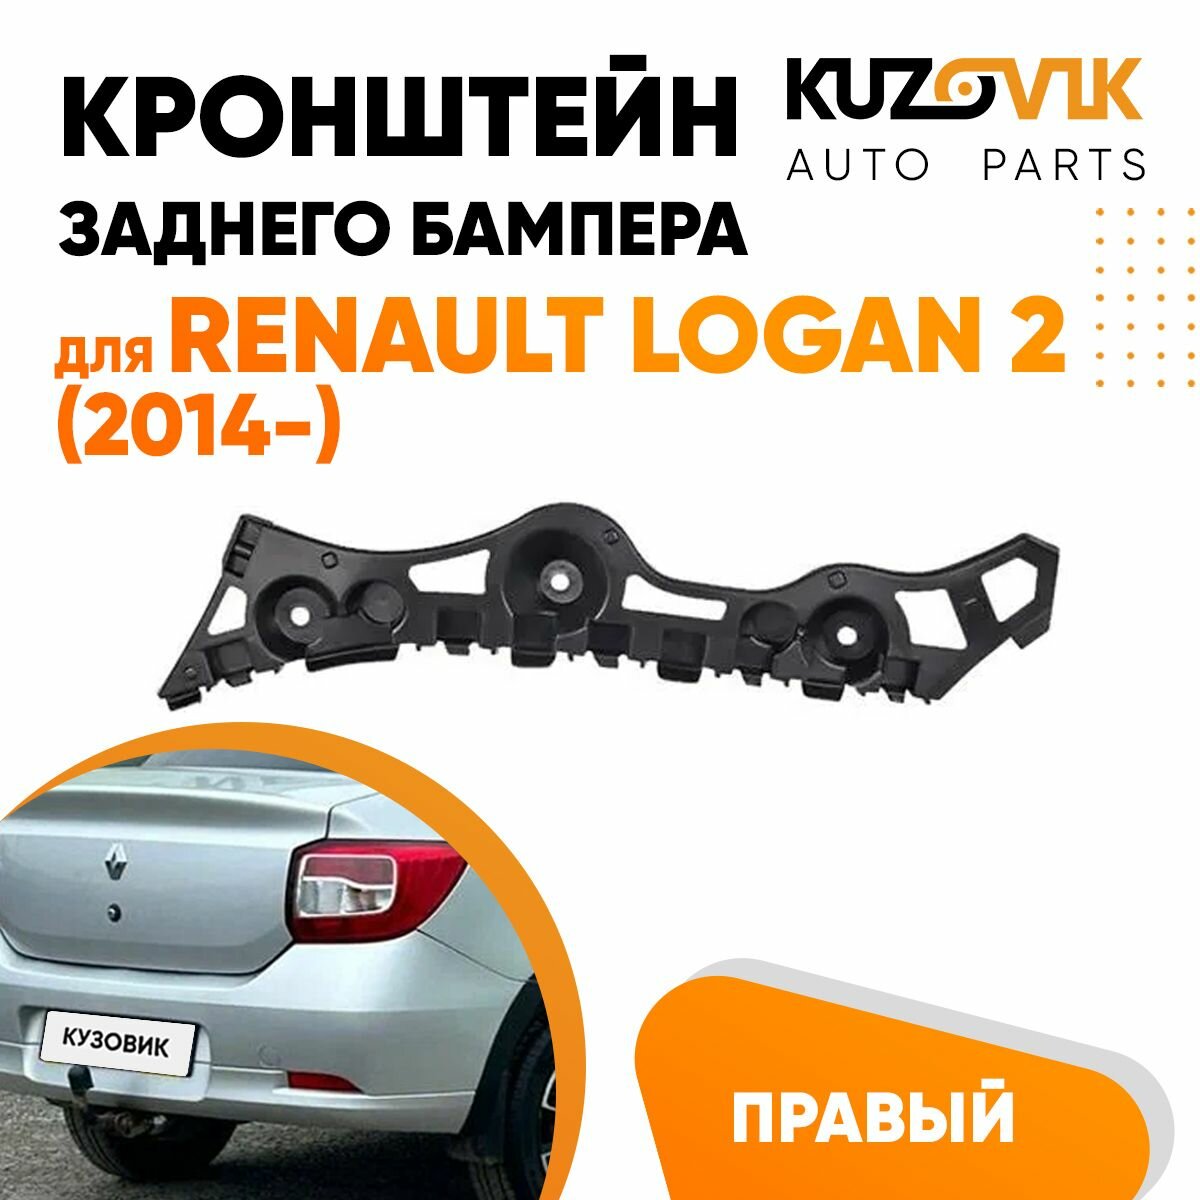 Кронштейн заднего бампера правый Renault Logan 2 (2014-)